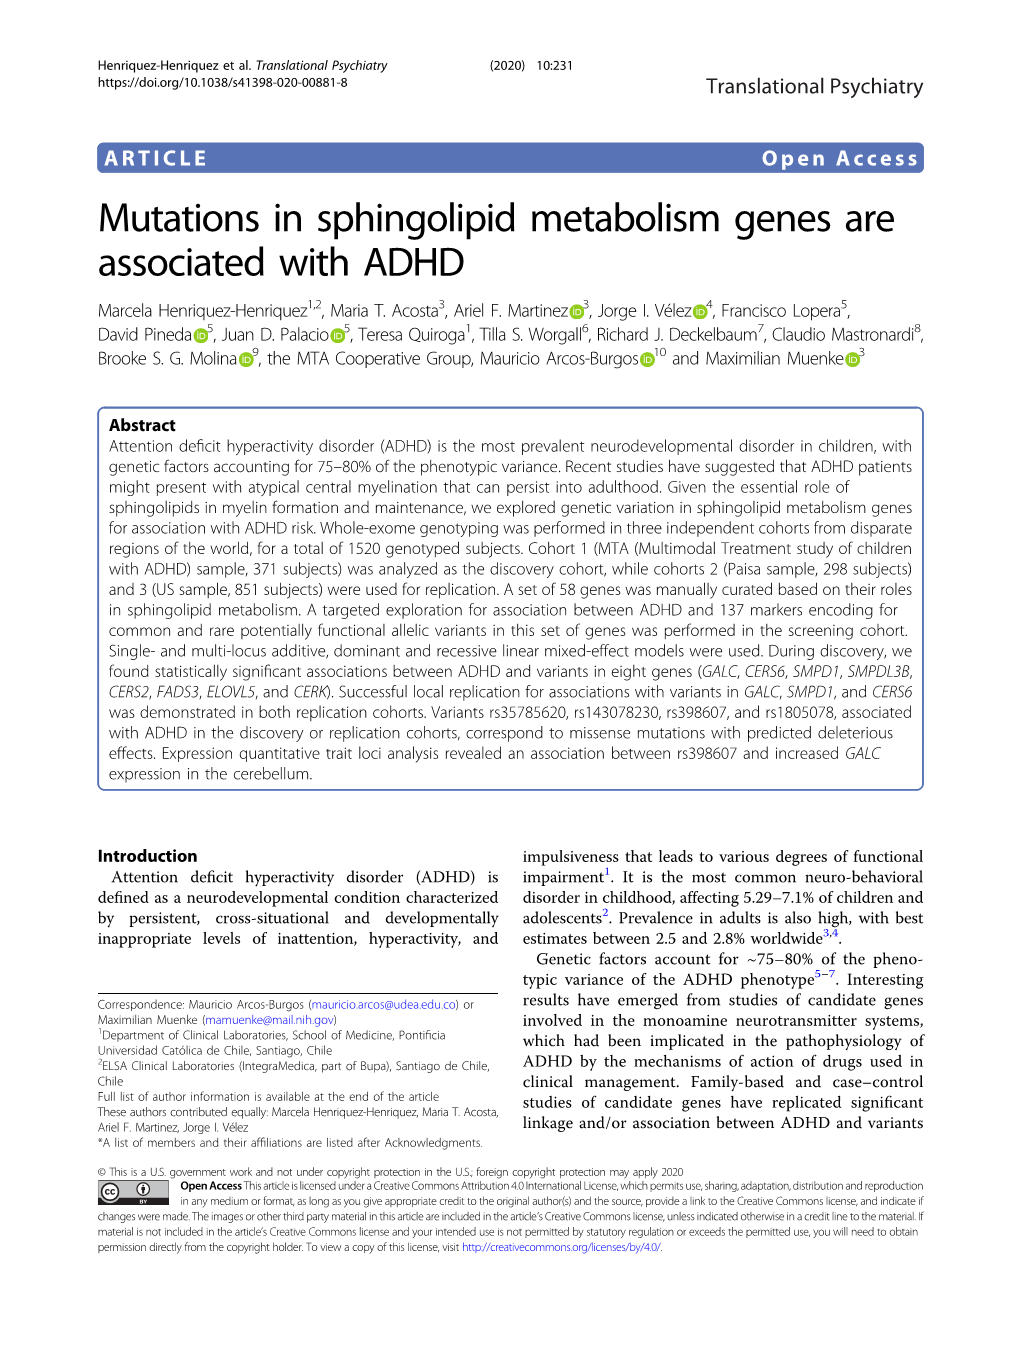 Mutations in Sphingolipid Metabolism Genes Are Associated with ADHD Marcela Henriquez-Henriquez1,2,Mariat.Acosta3, Ariel F